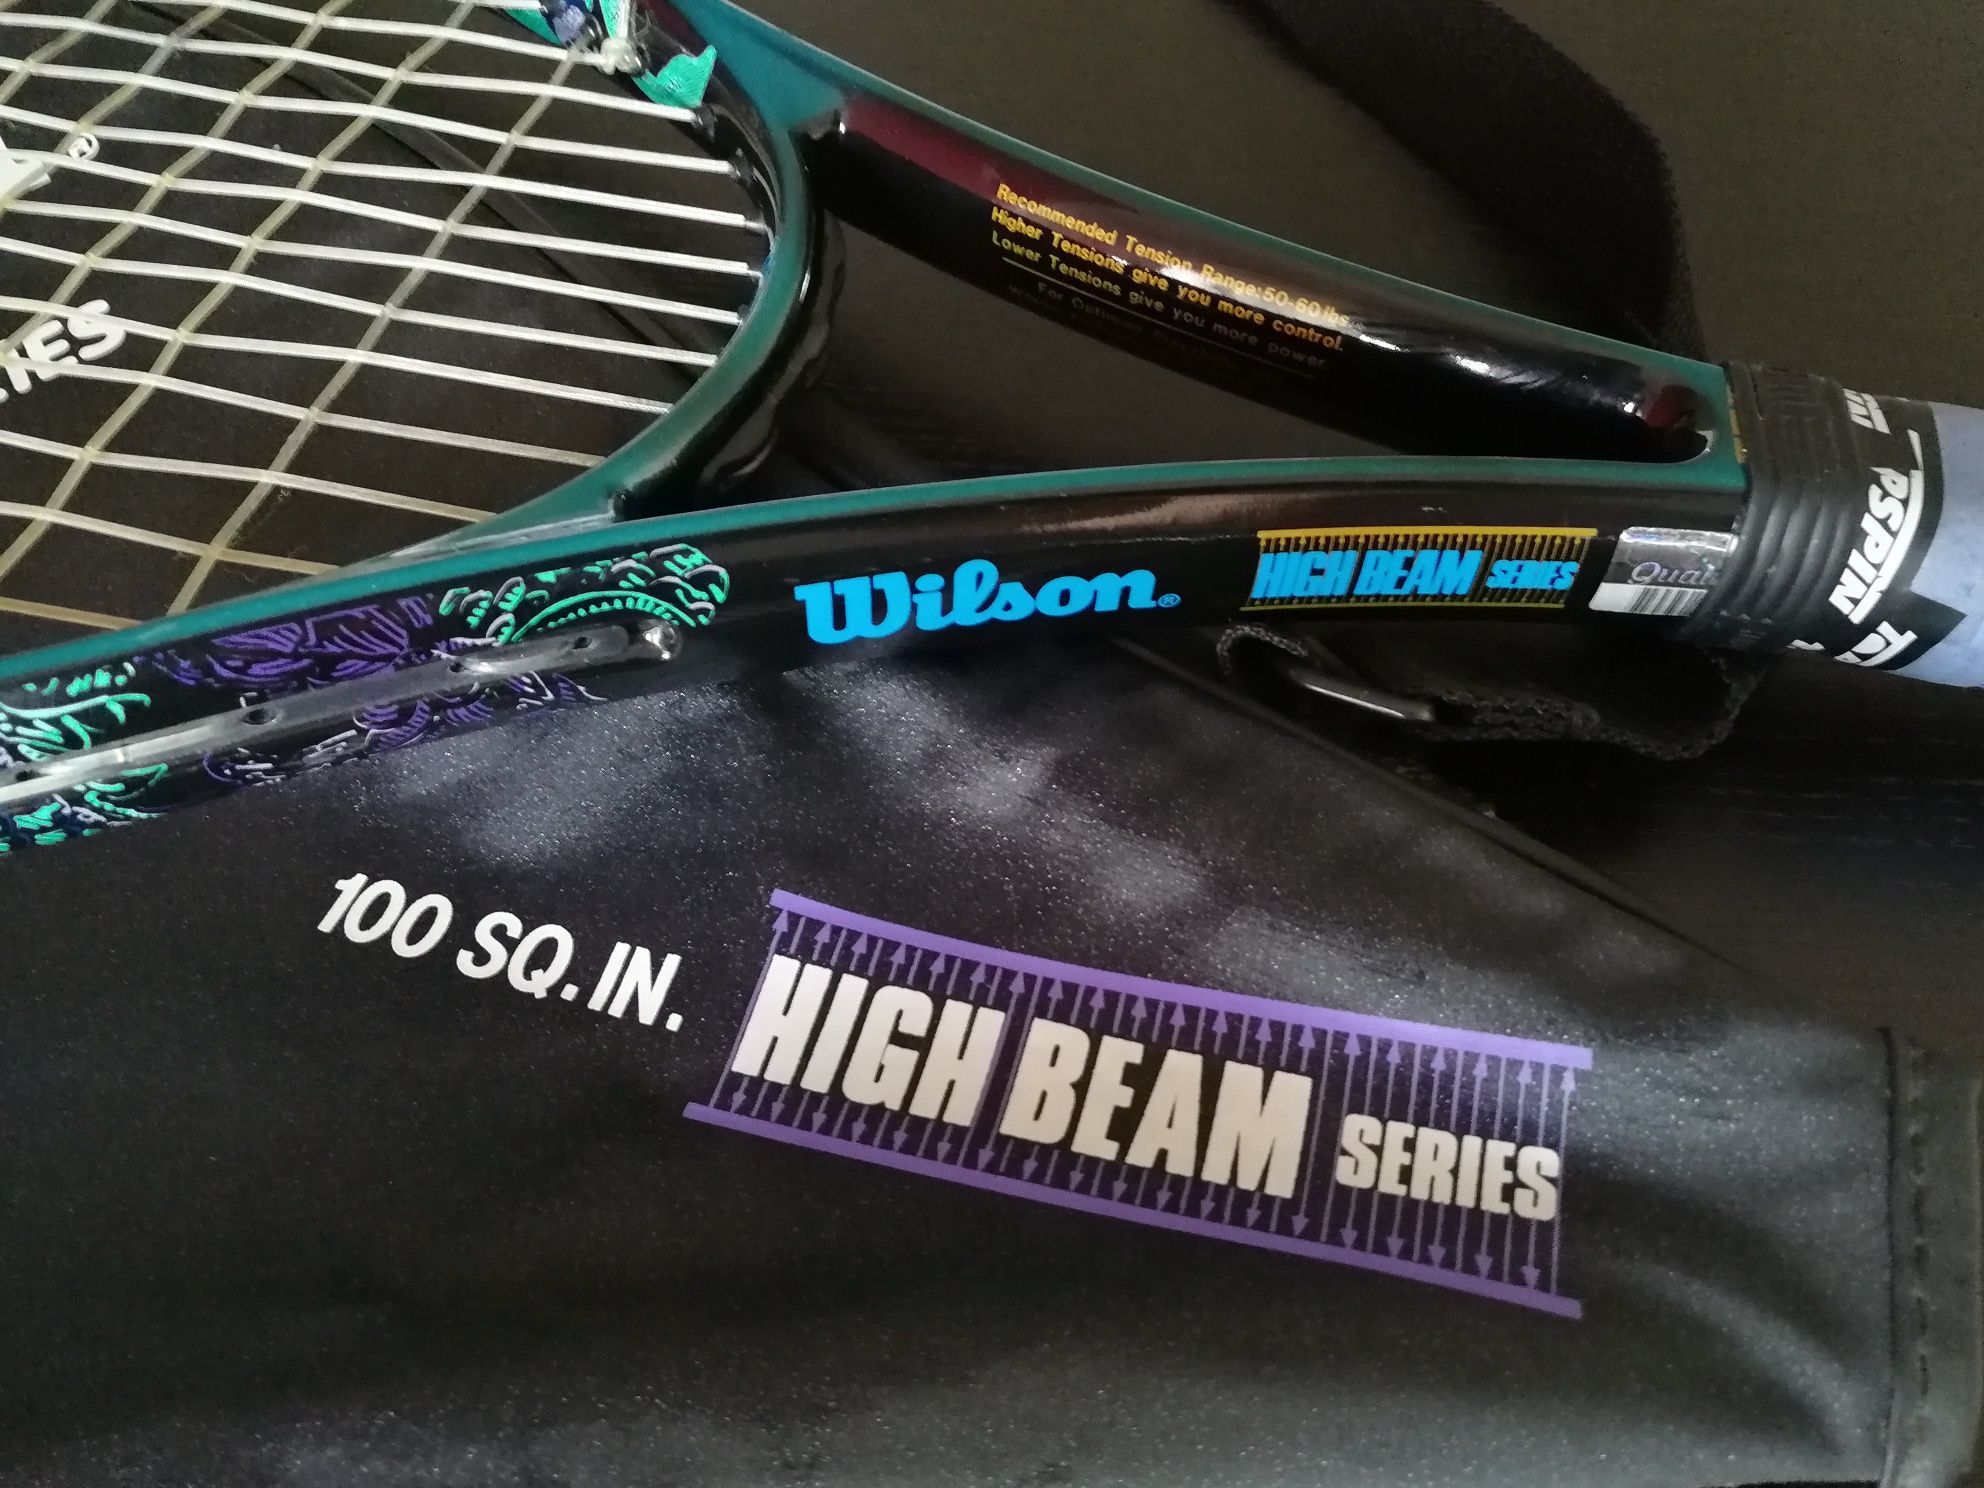 Raquete Wilson High Beam Series